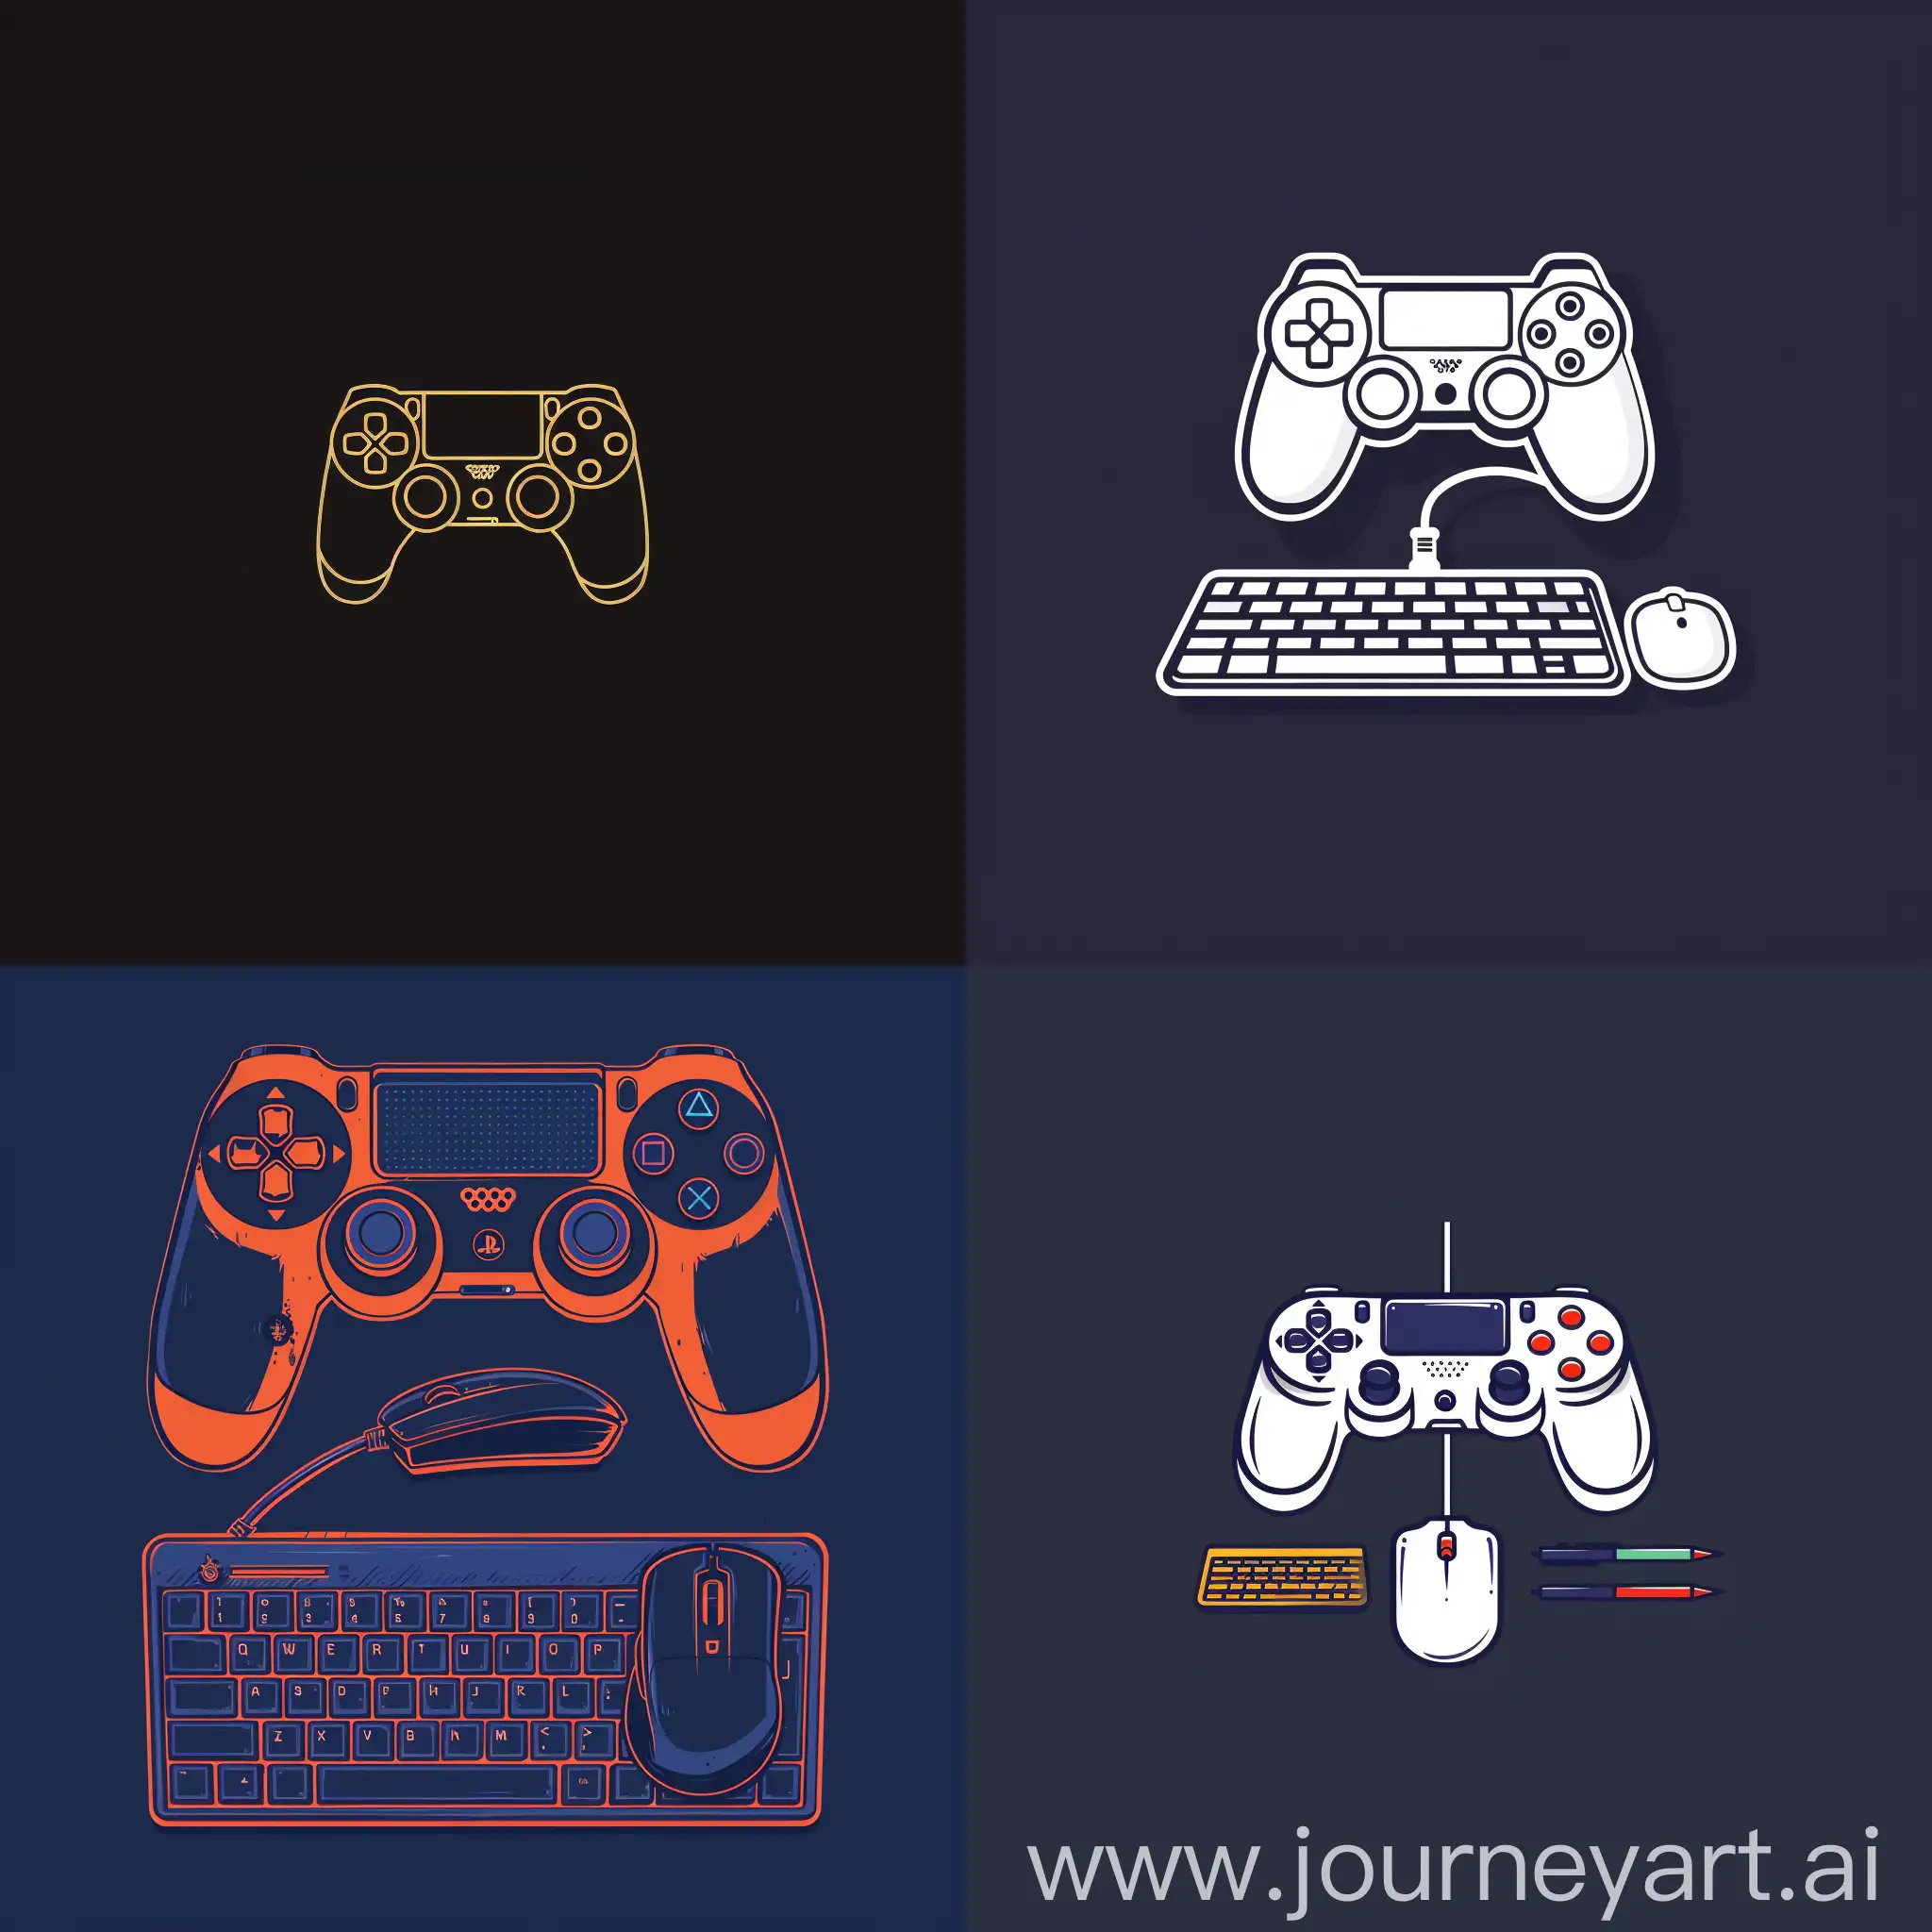  logo, gamepad, mouse, keyboard, minimalism, drawing slyle, modern